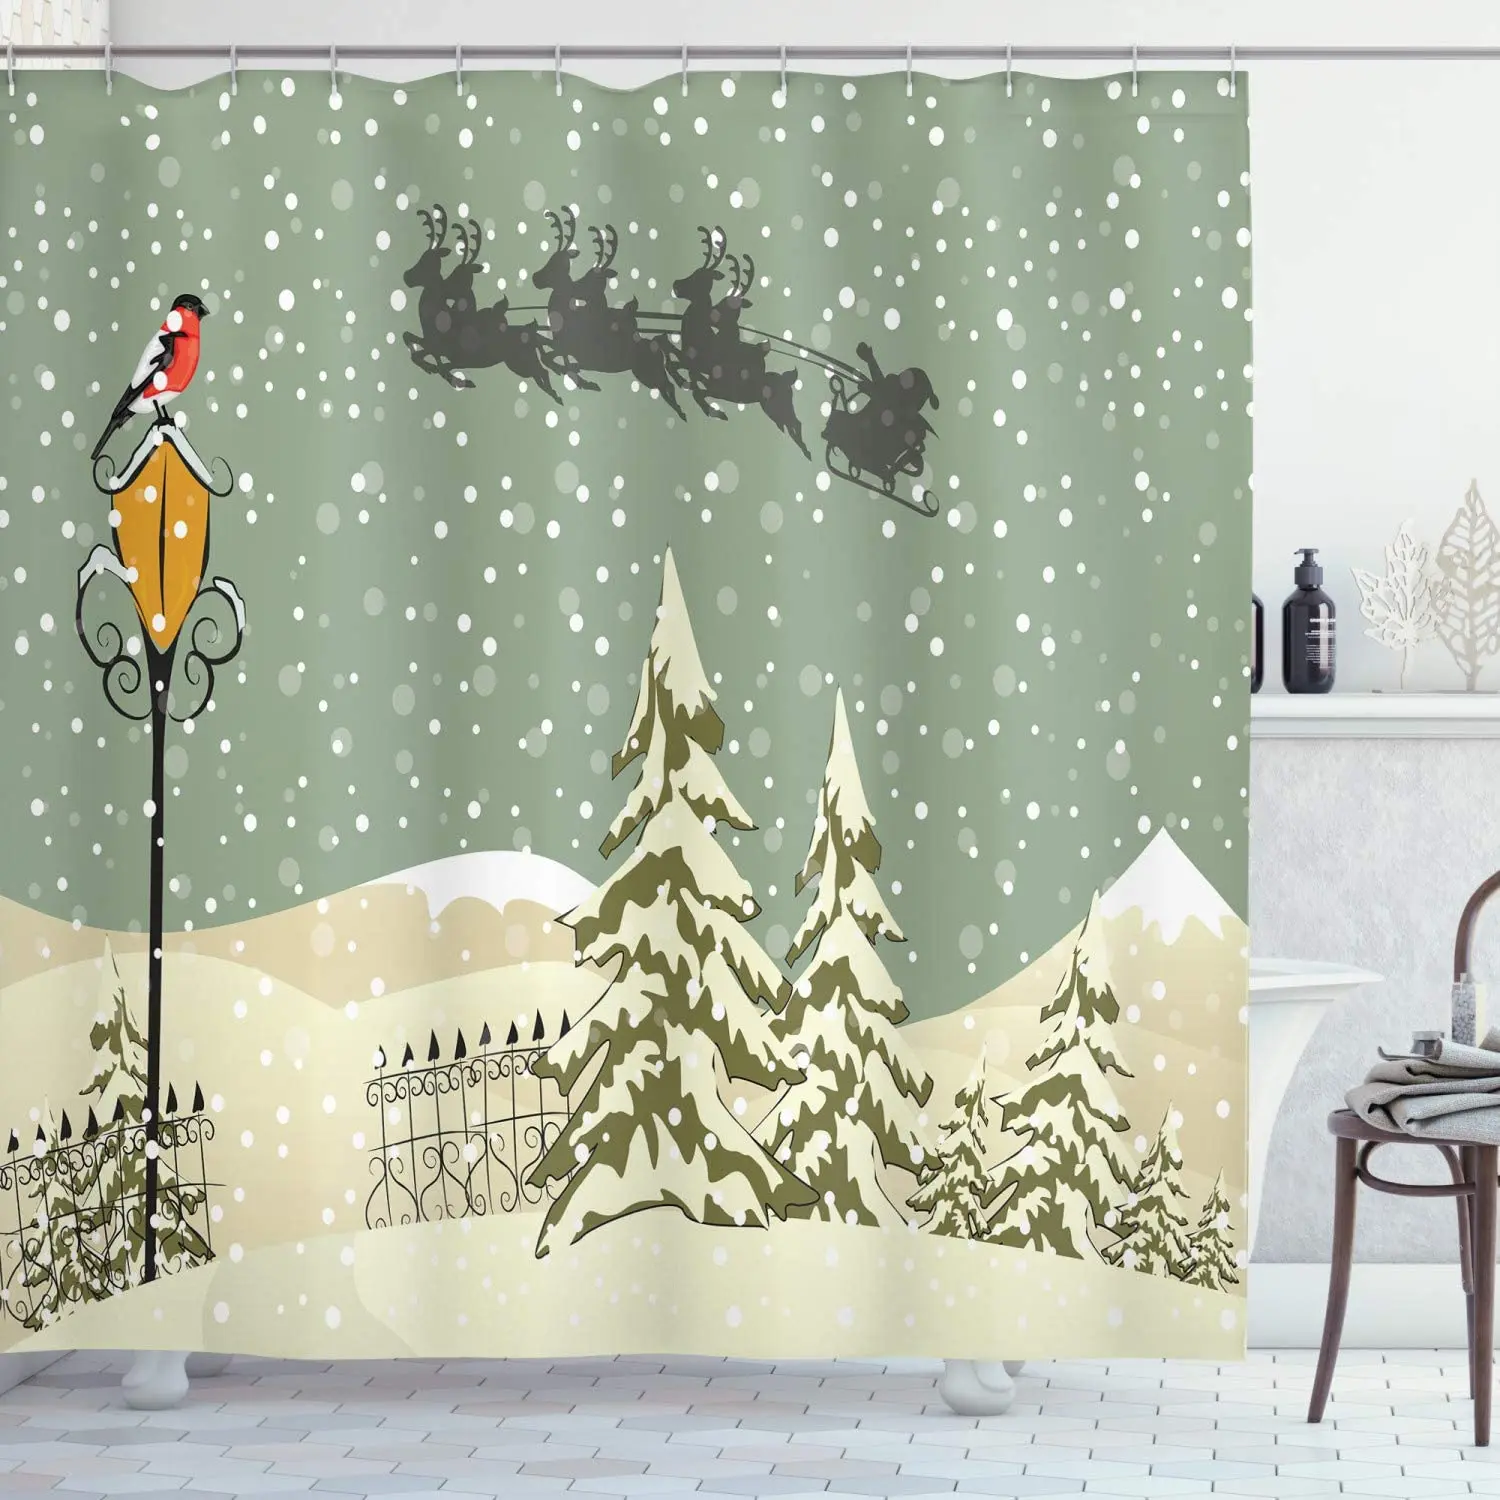 Merry Christmas Shower Curtains Set Winter Xmas Trees Red Bird Street Lamp Holiday Bathroom Decor With Hooks Fabric Bath Curtain